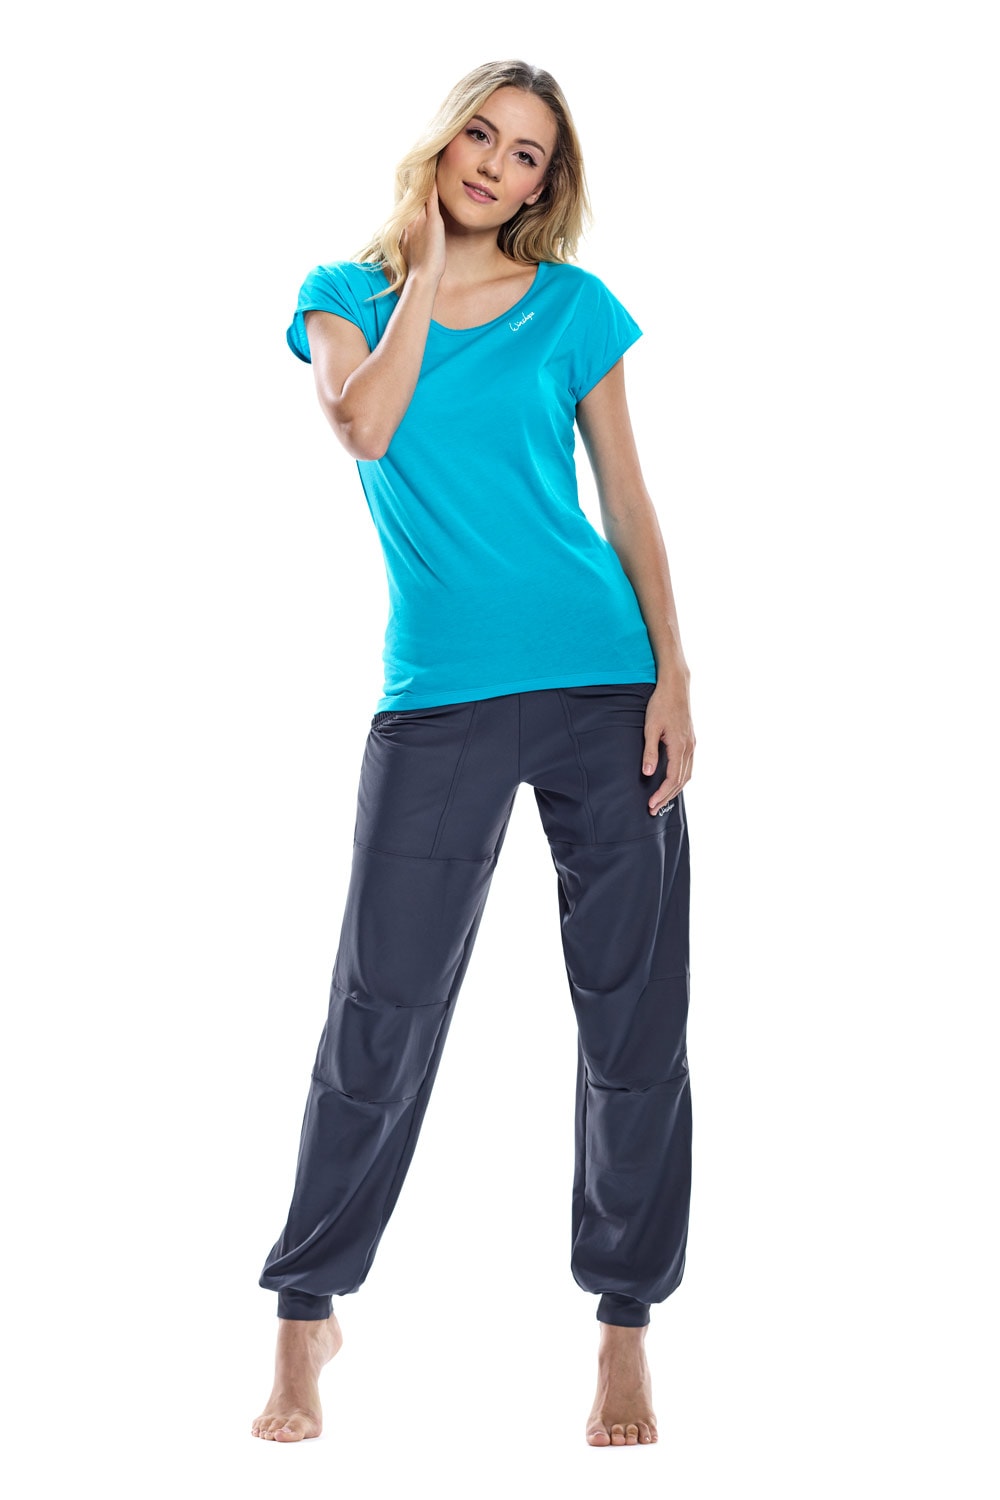 LEI101C«, Sporthose Online-Shop Waist Time High Trousers Leisure Winshape im Comfort bestellen »Functional